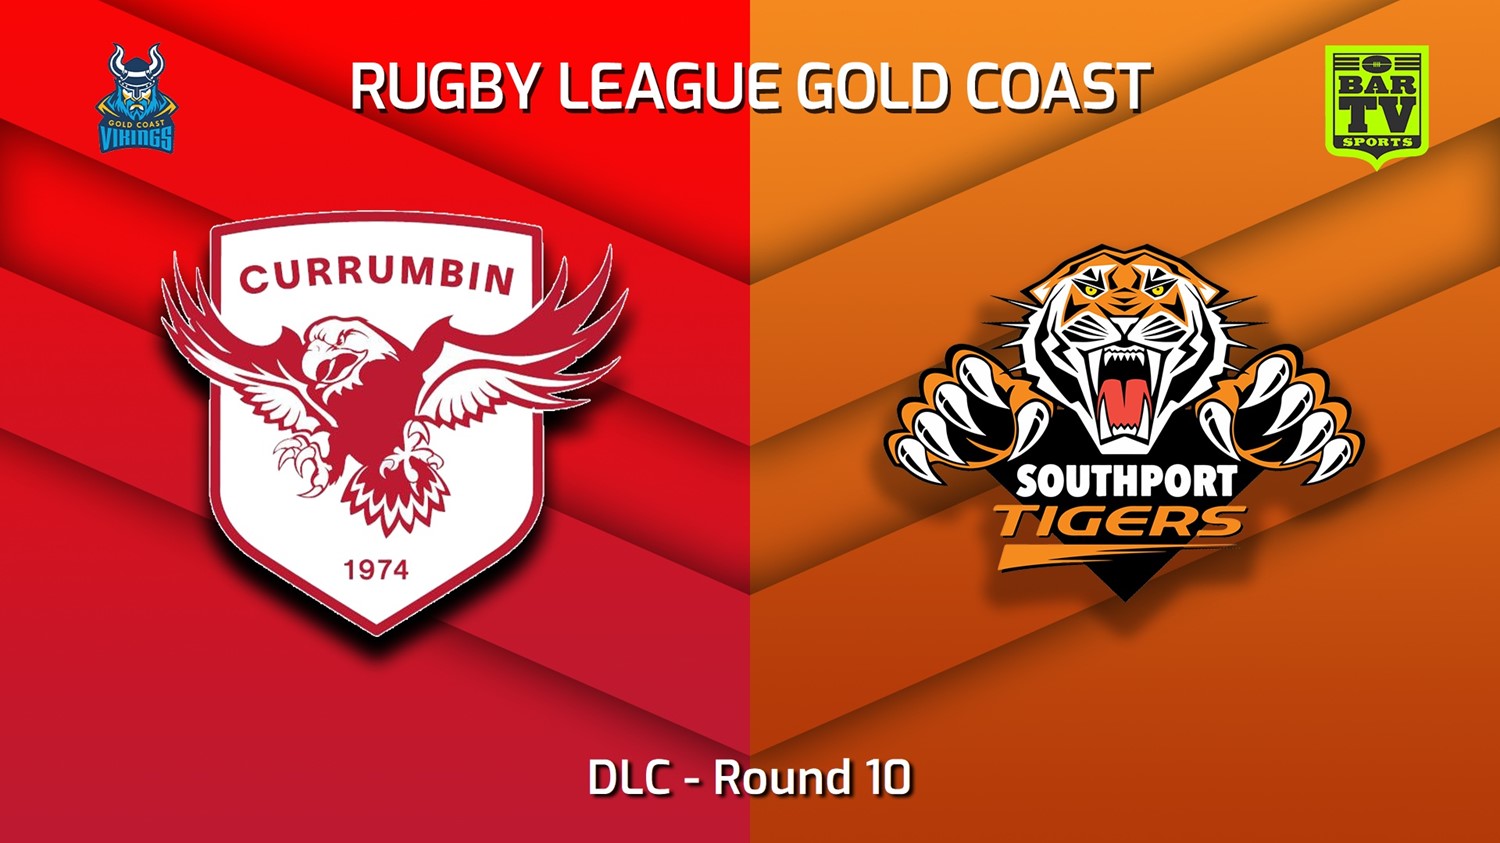 230702-Gold Coast Round 10 - DLC - Currumbin Eagles v Southport Tigers Slate Image